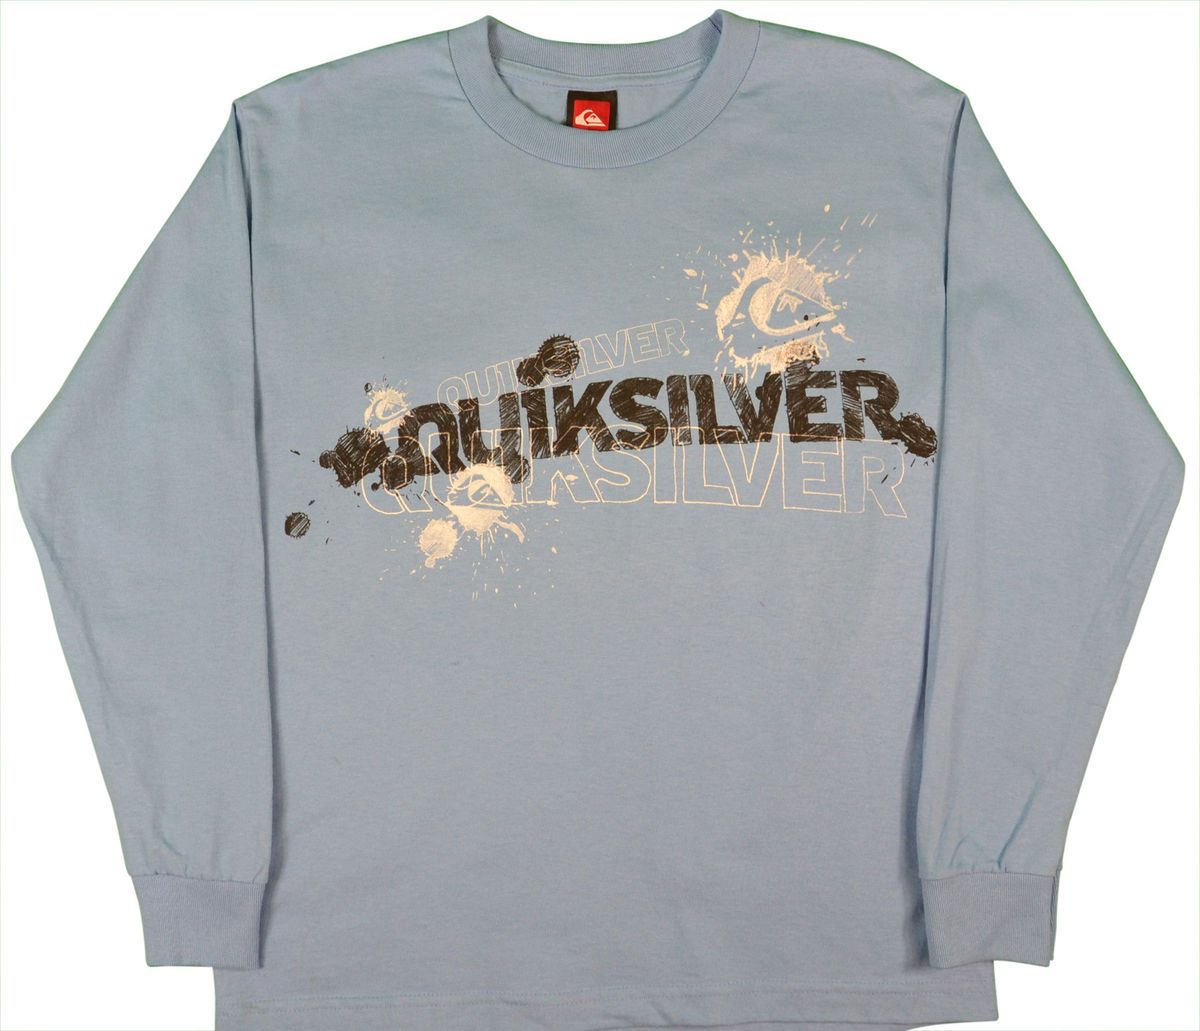  Quiksilver Boys Size 8 16 Logo Shirt Sky Blue